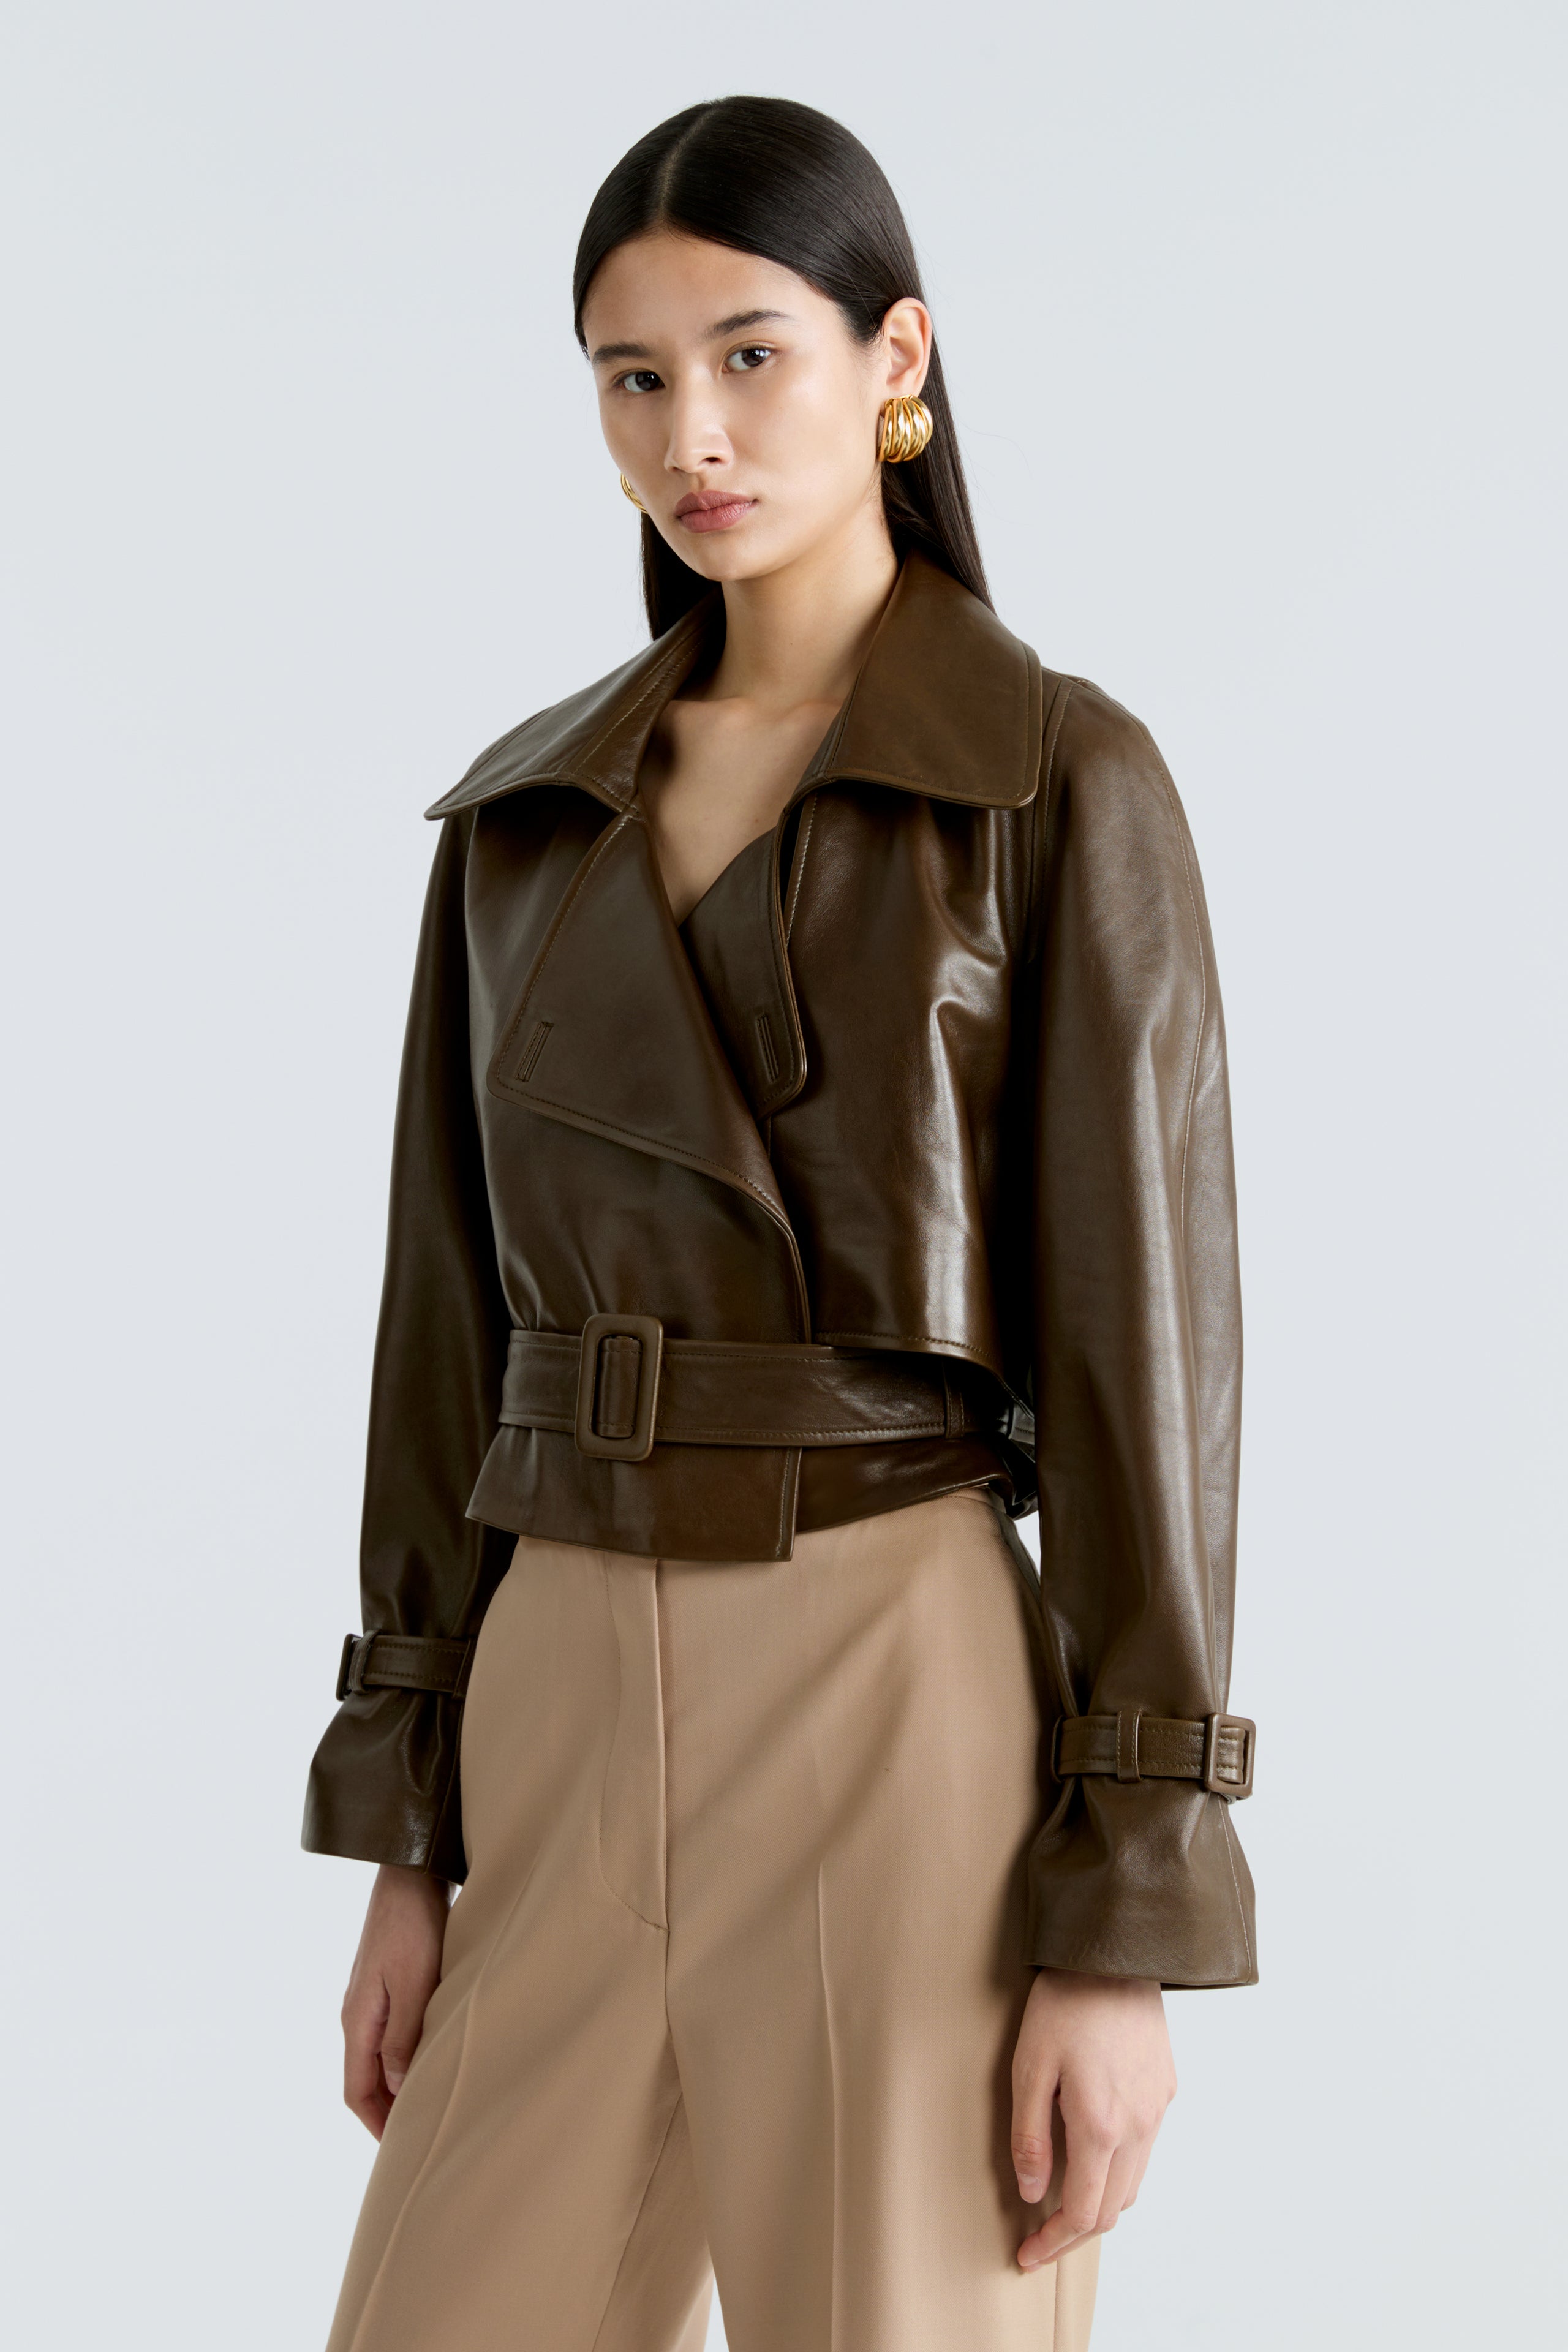 Model is wearing the Hatti Nicoise Cropped Leather Jacket Side